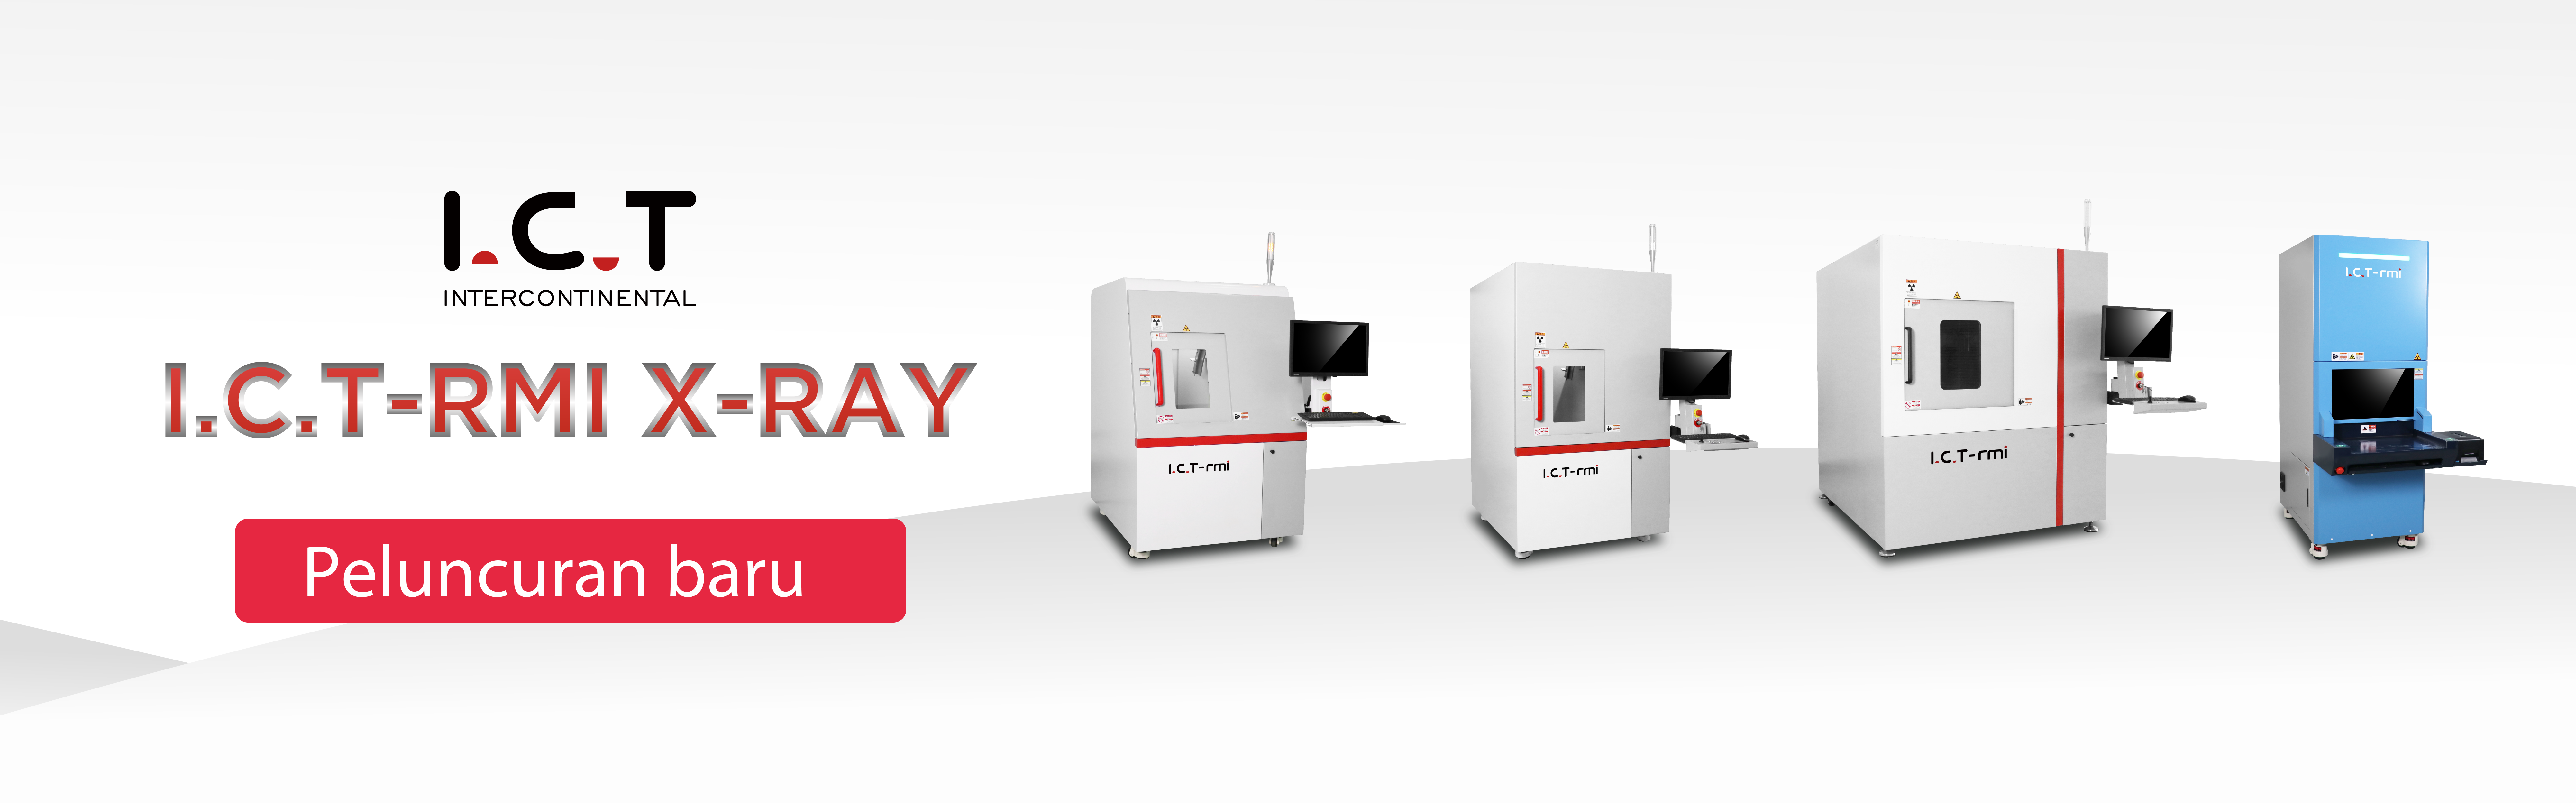 smtfactory-PCB X-ray Inspection Machine